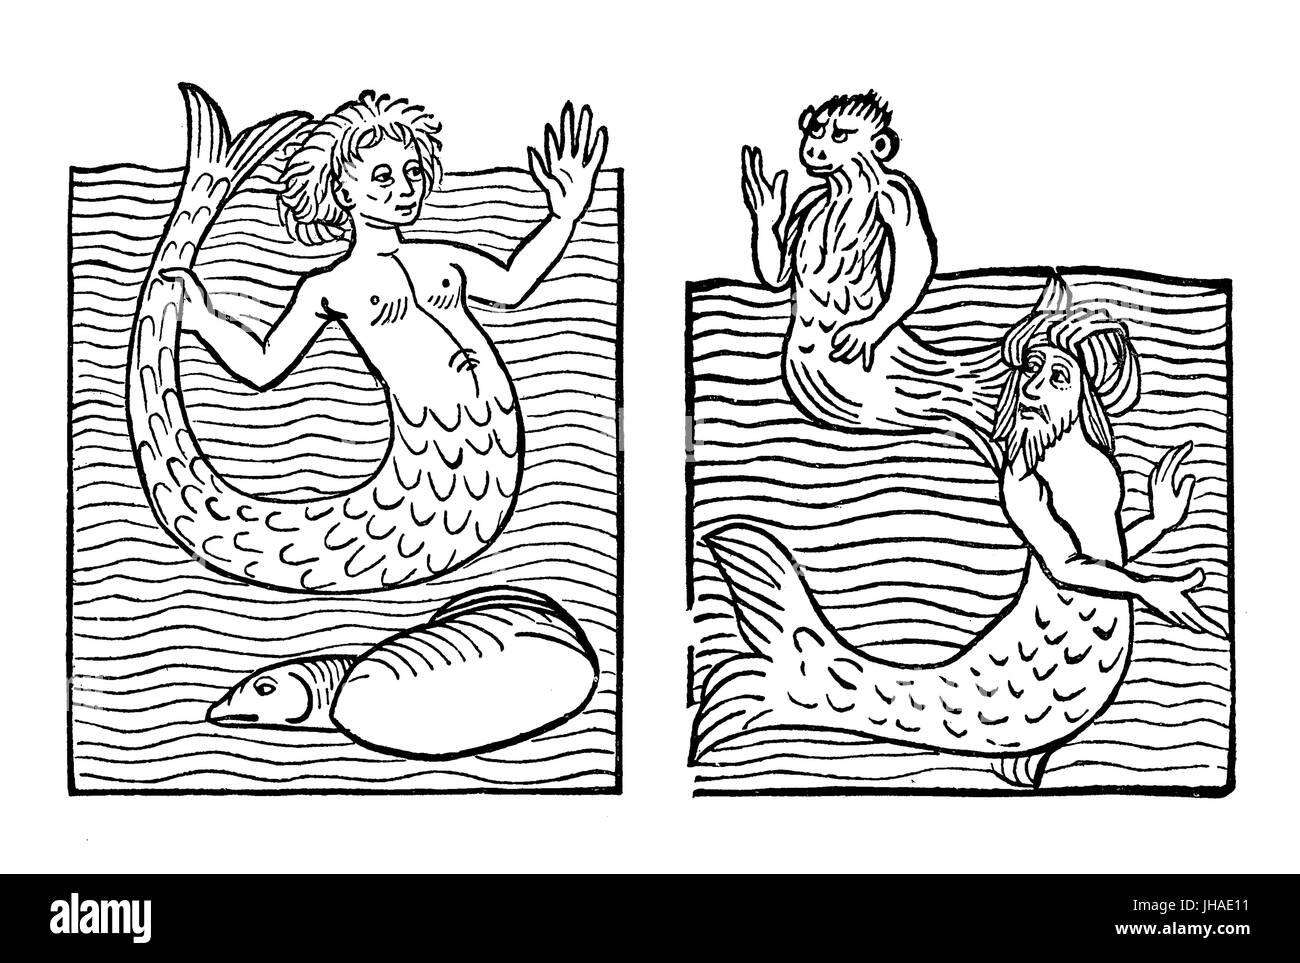 Sea monster and humal-like creature: mermaid, sea monkey, sea turk, medieval engraving, year 1491 Stock Photo